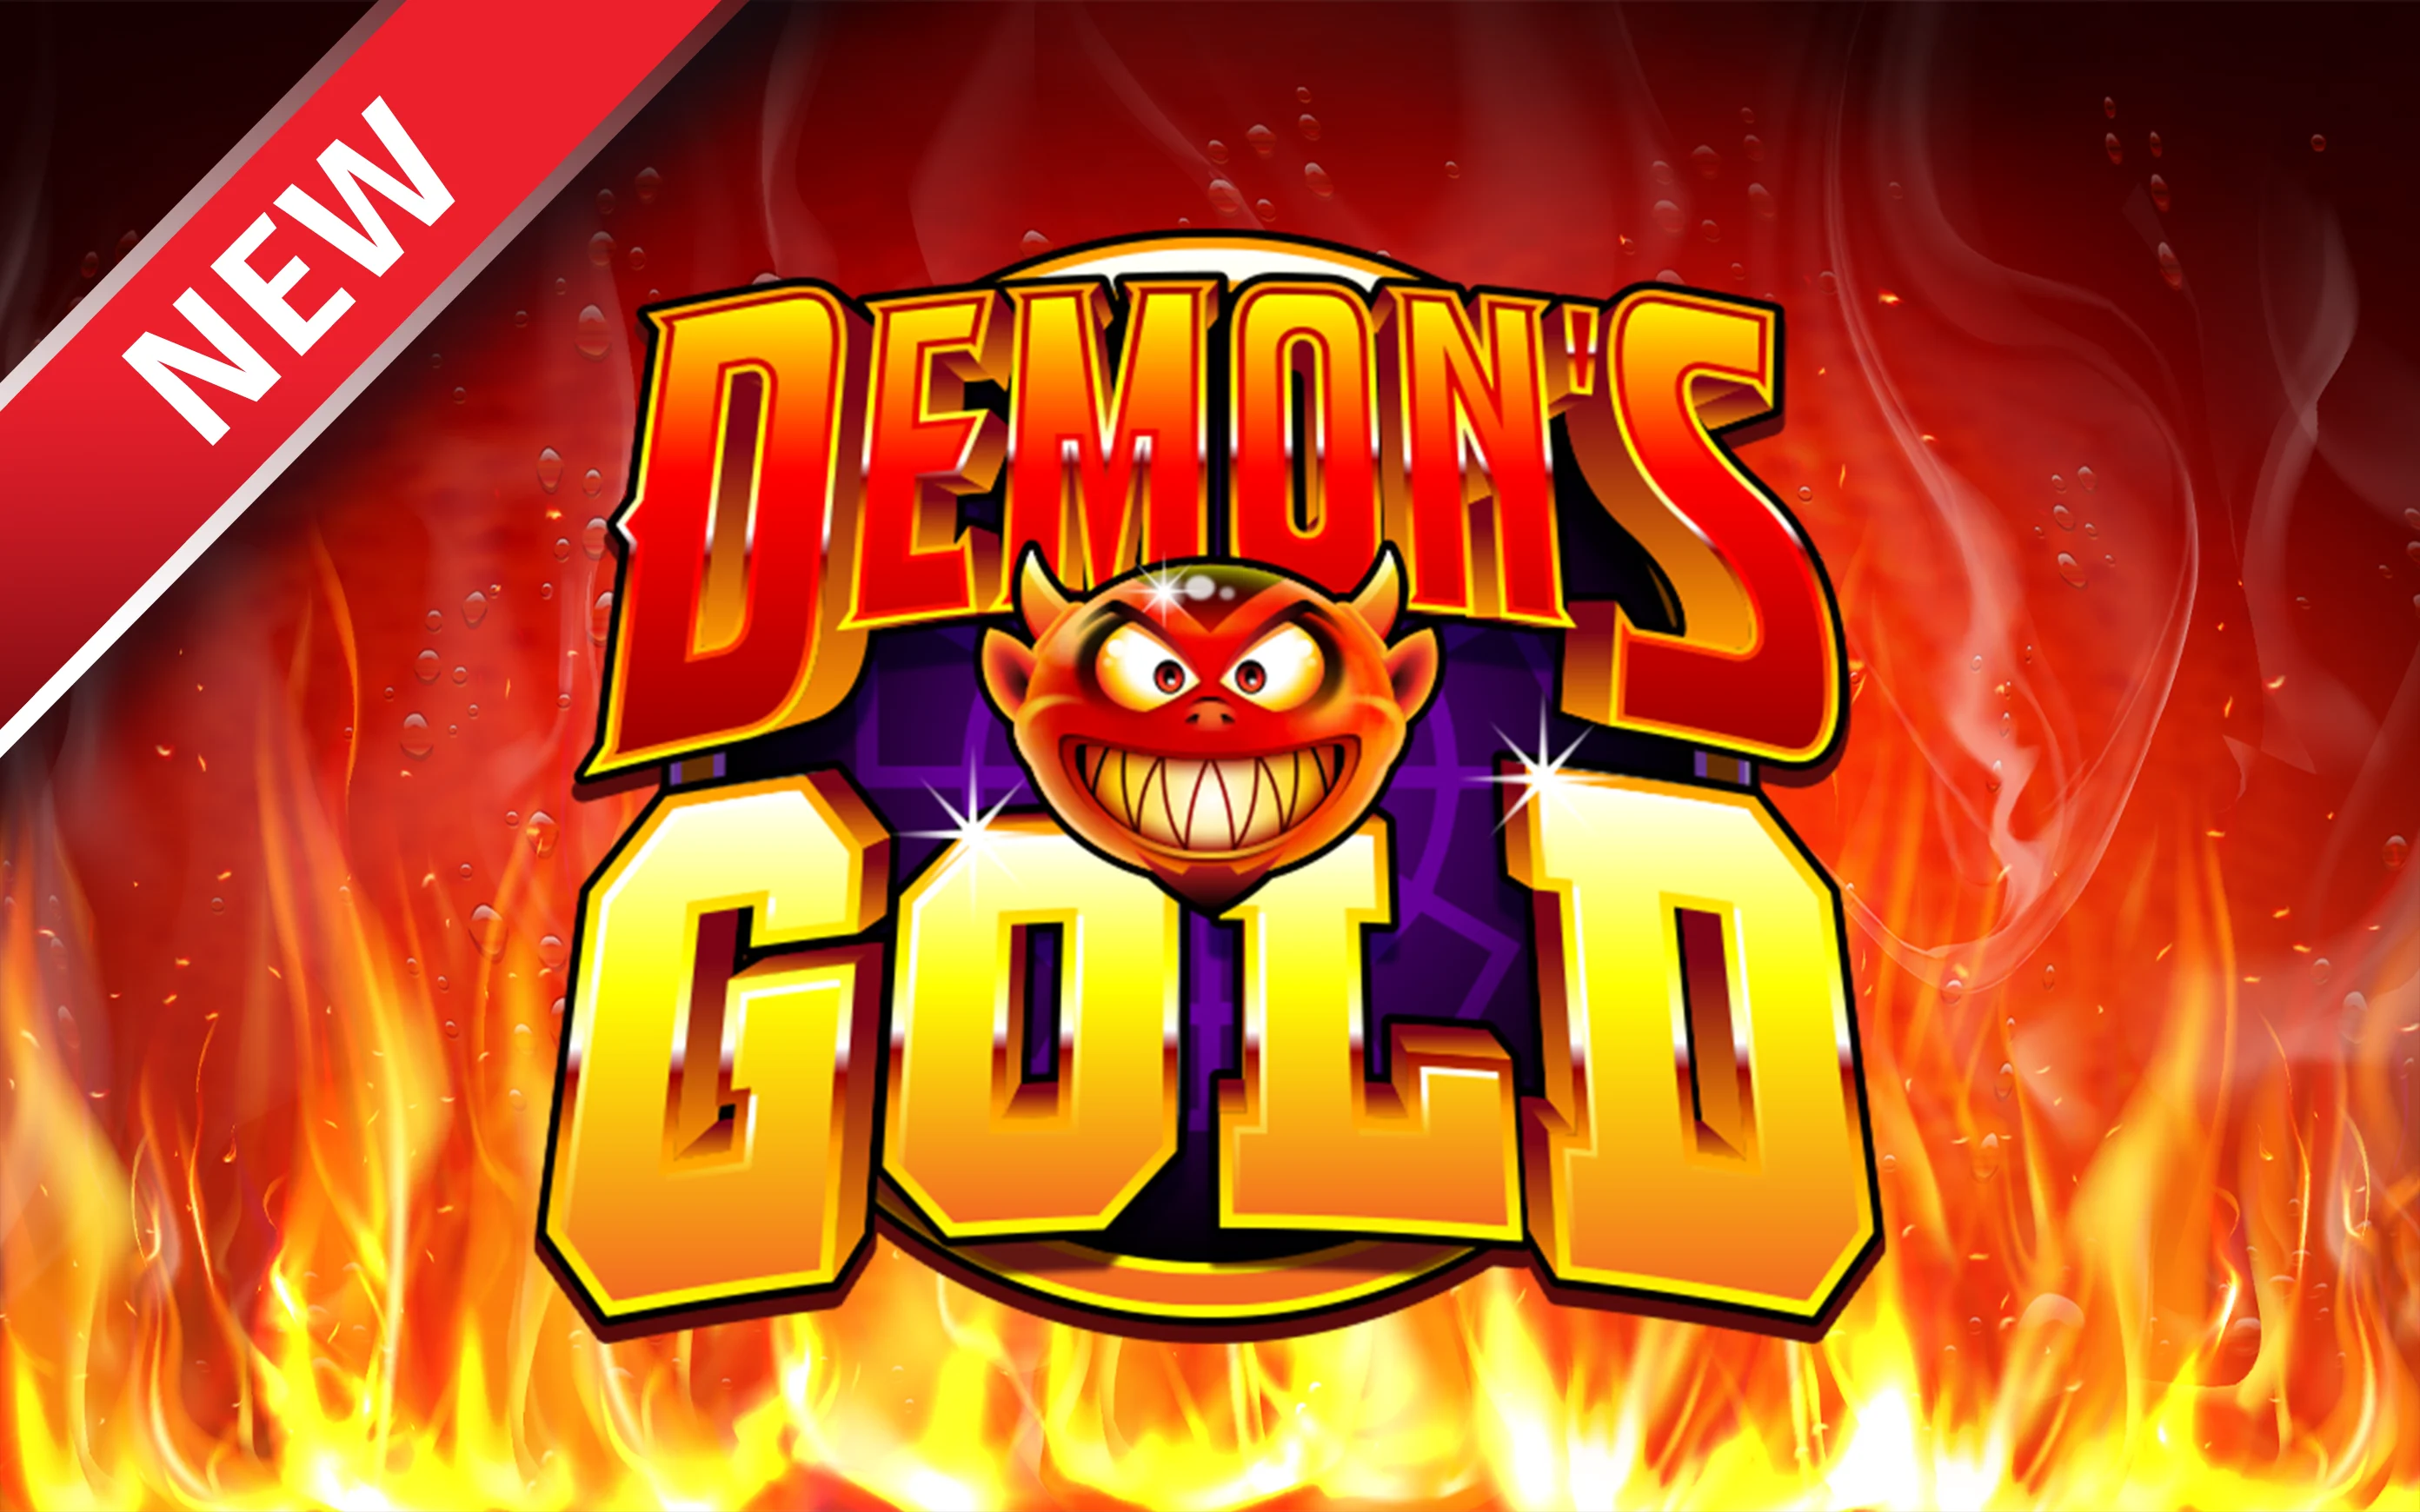 Play Demon's Gold on Starcasino.be online casino